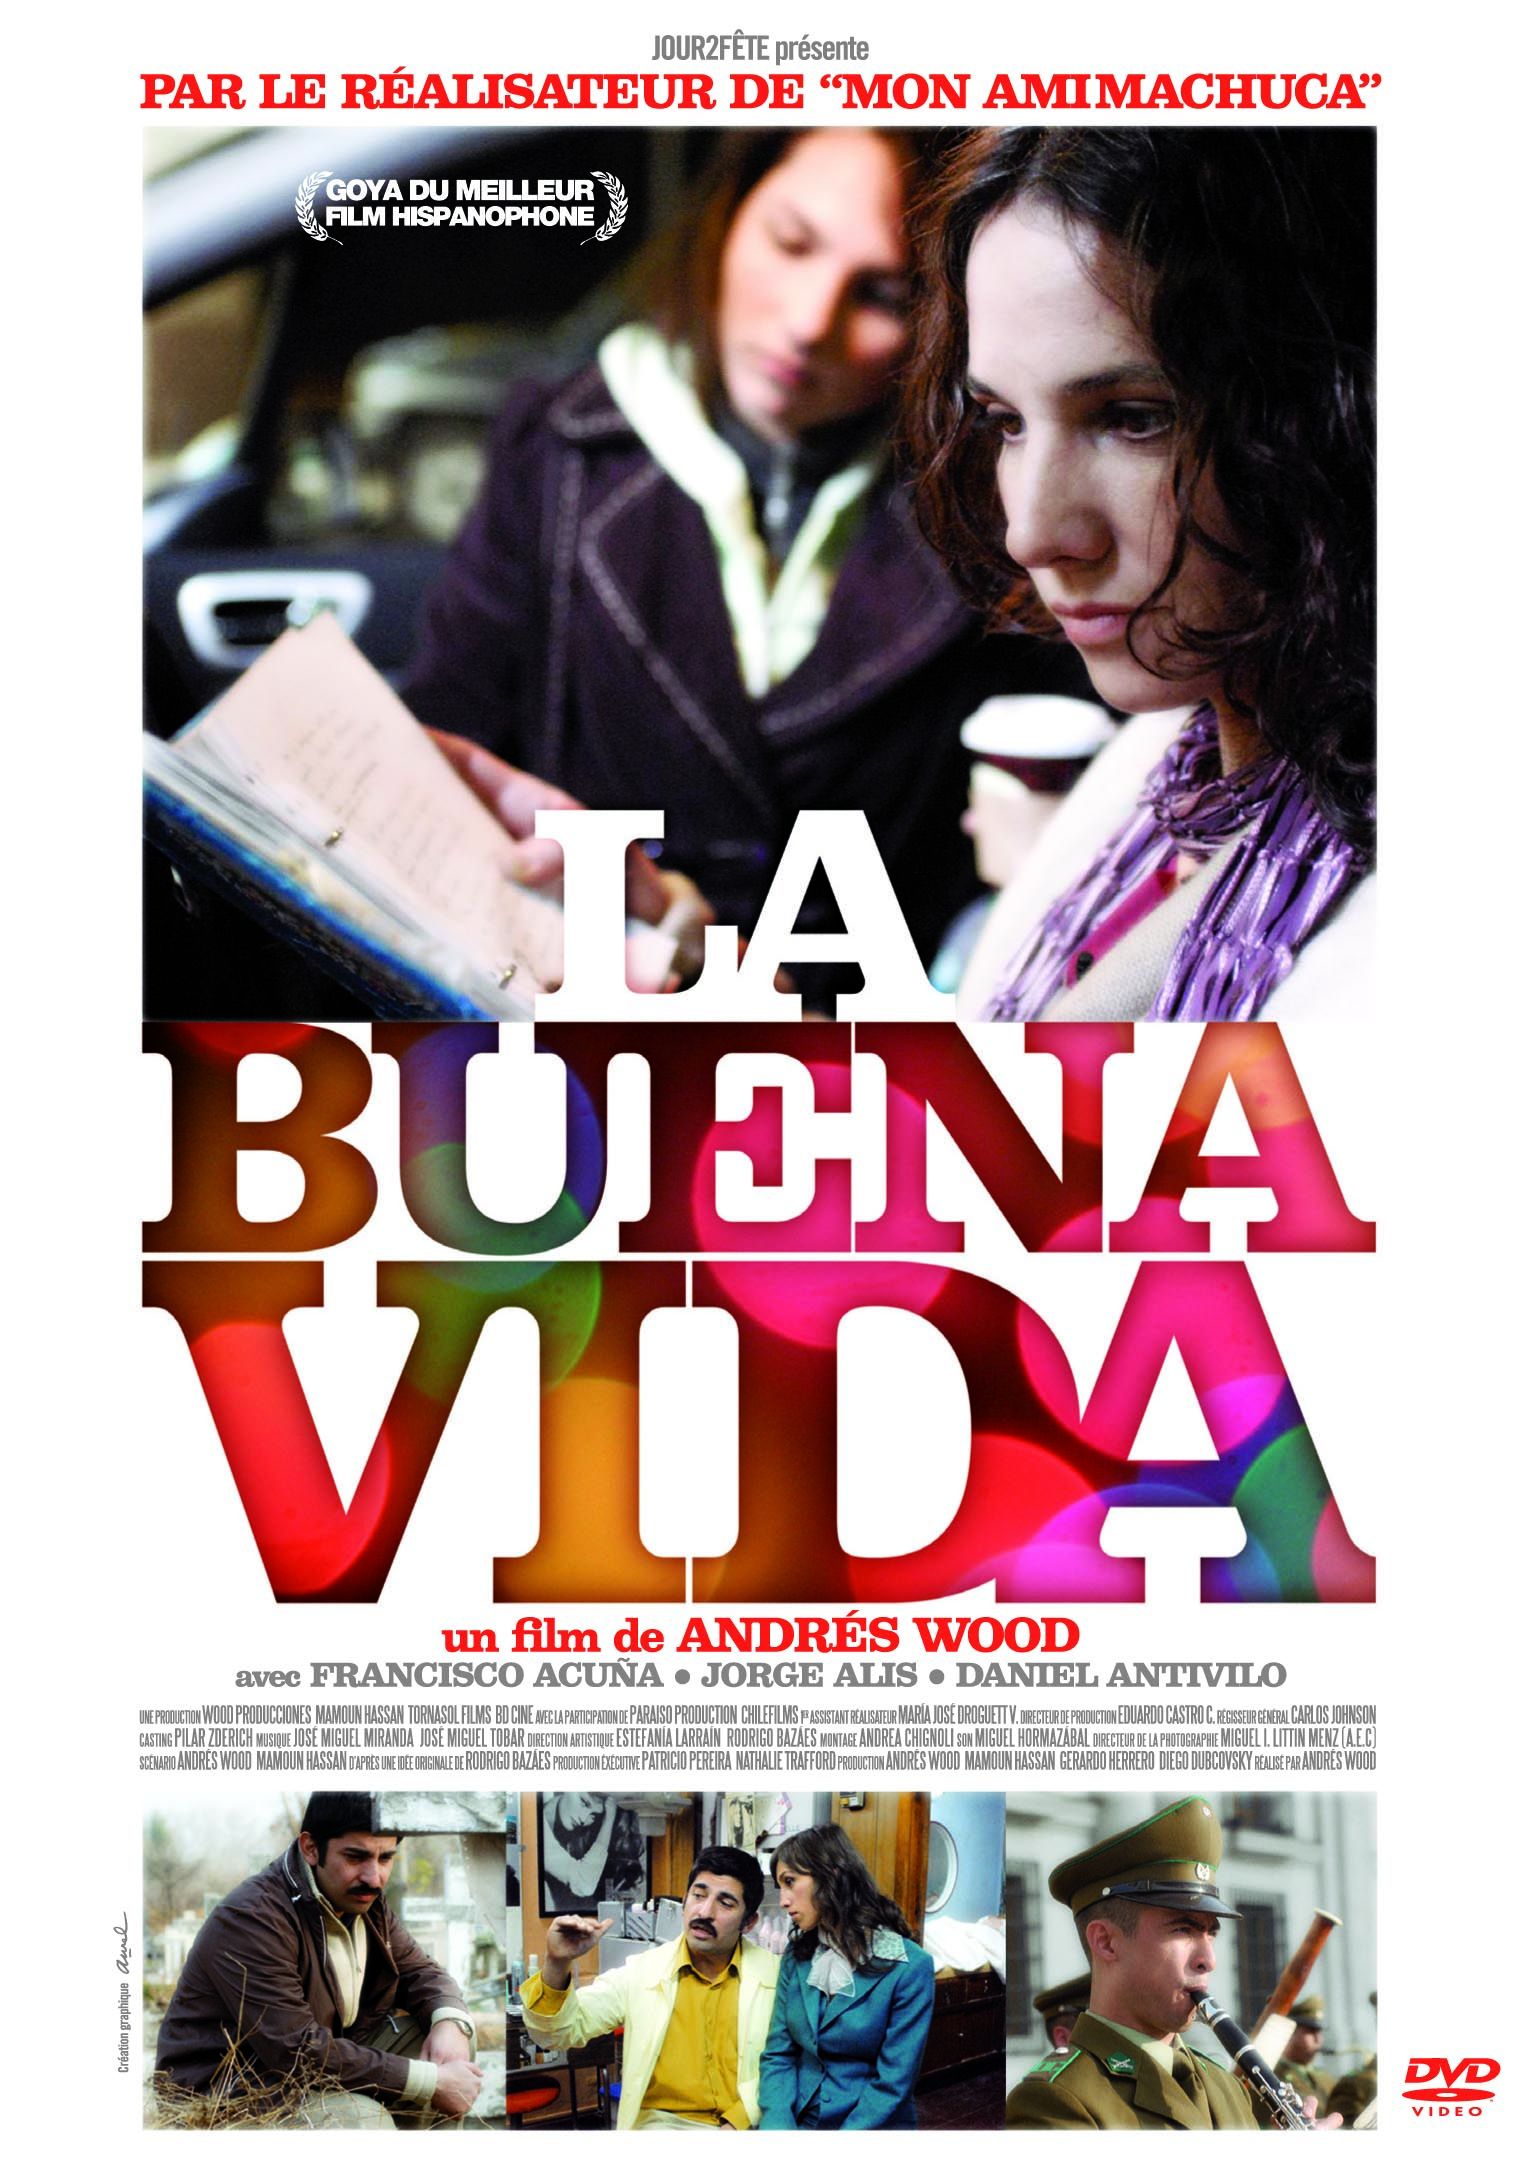 La Buena vida [DVD]